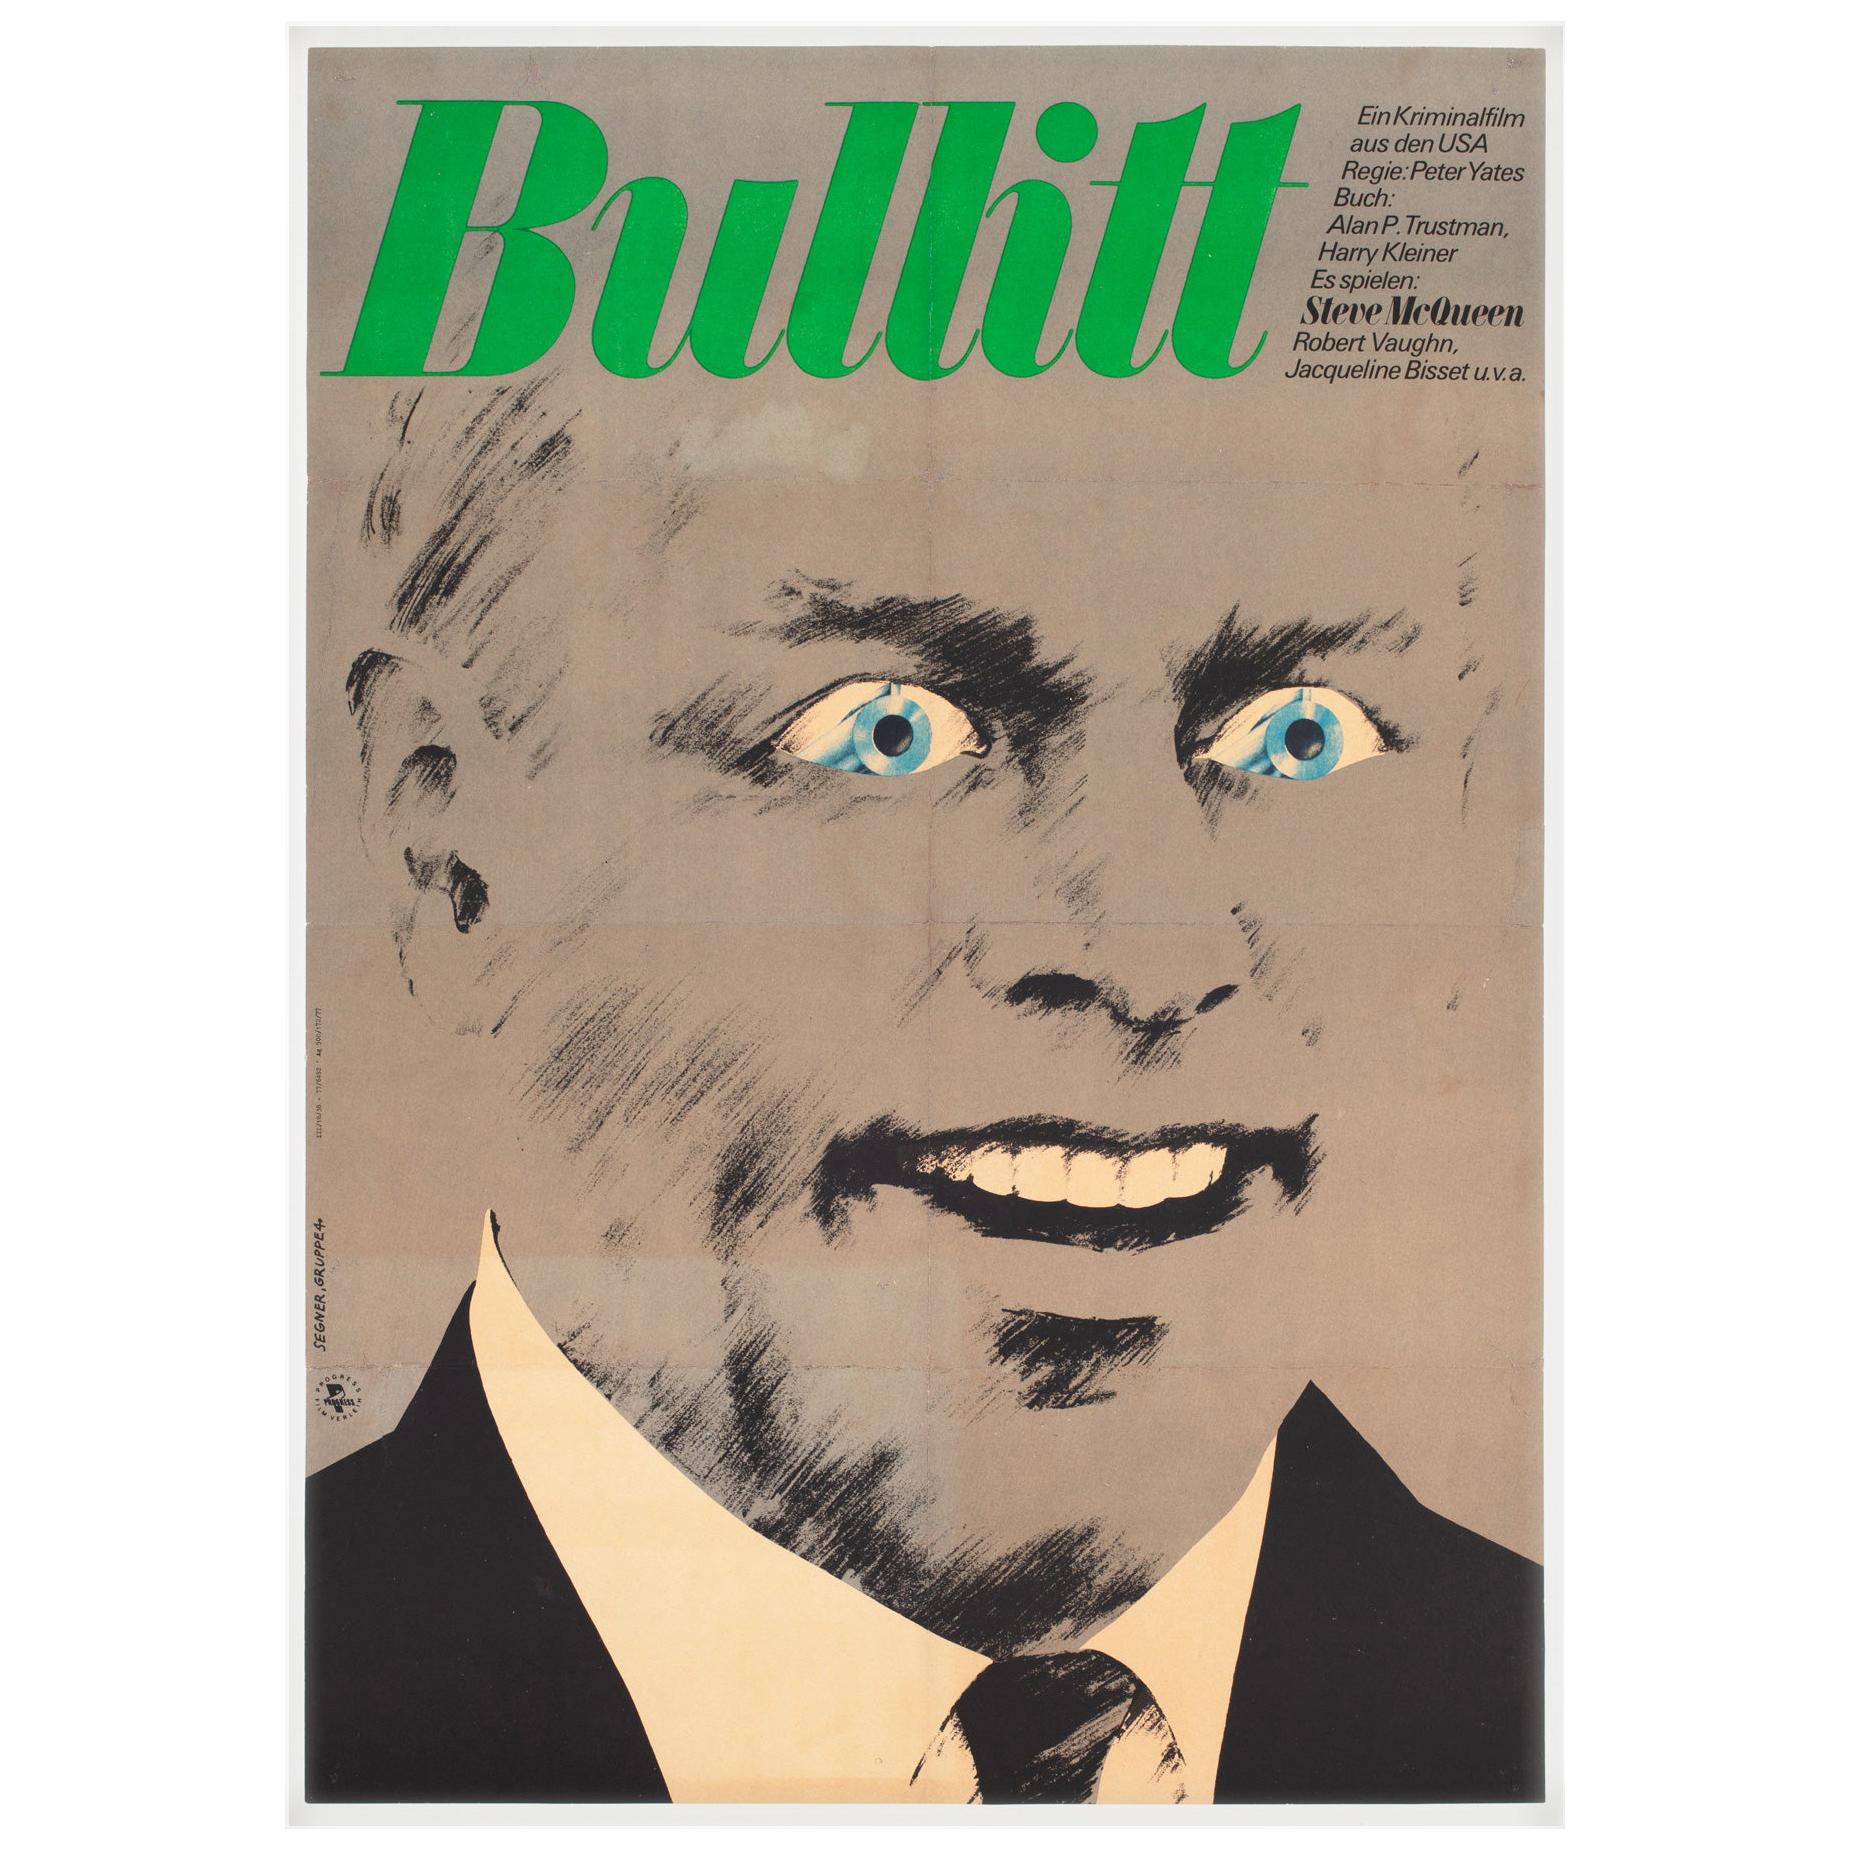 Affiche de l'Allemagne de l'Est du film Bullitt, 1977, Segner, support en lin